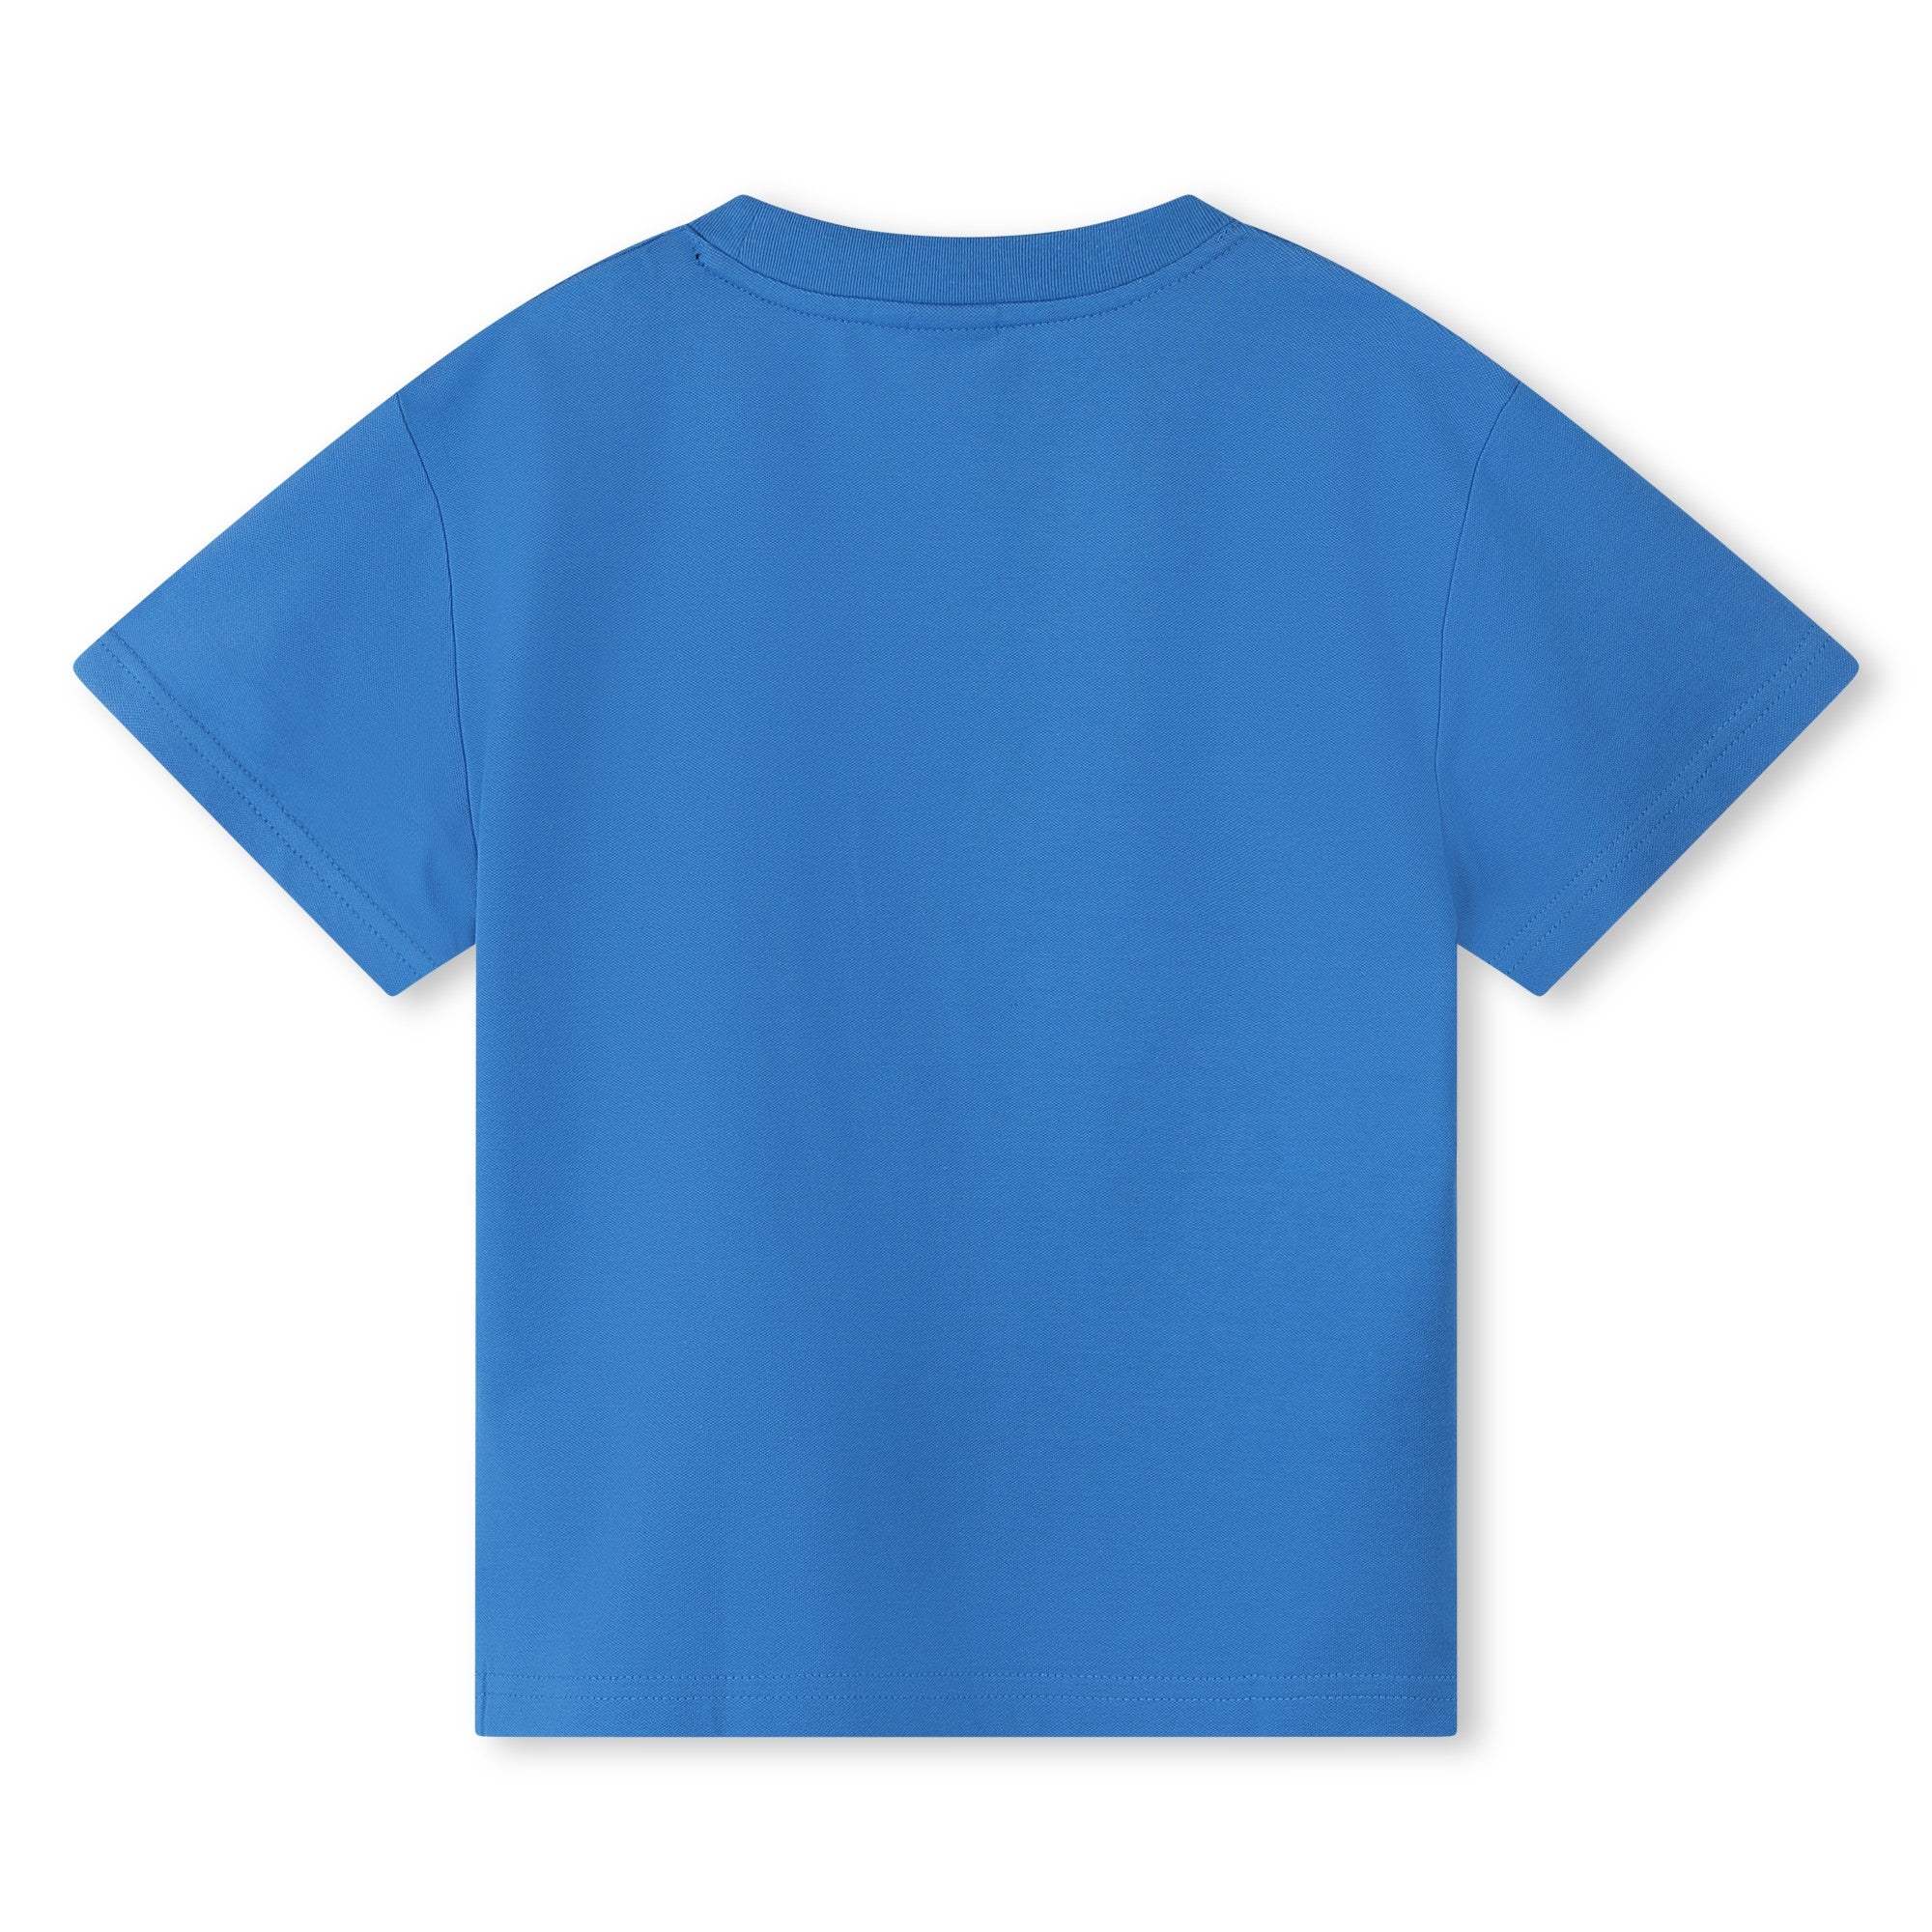 Tee-shirt 14A Navy 54% Cotton, 40% Polyester, 6% Elastane - Trimming: 56% 41% 3%